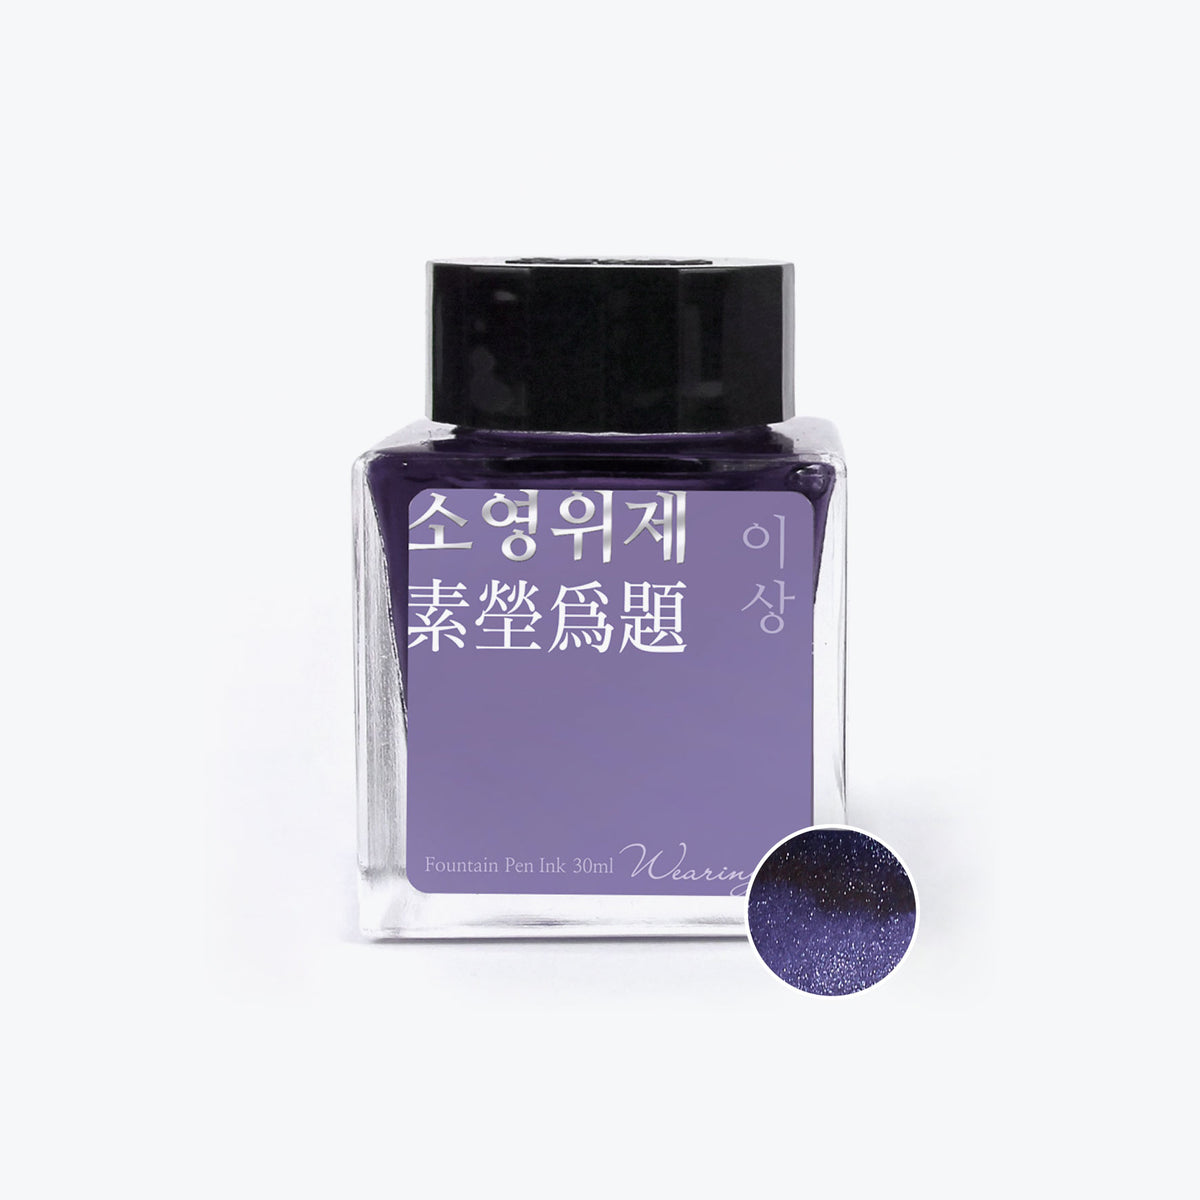 Wearingeul - Fountain Pen Ink - Soyoungwije (Shimmer)